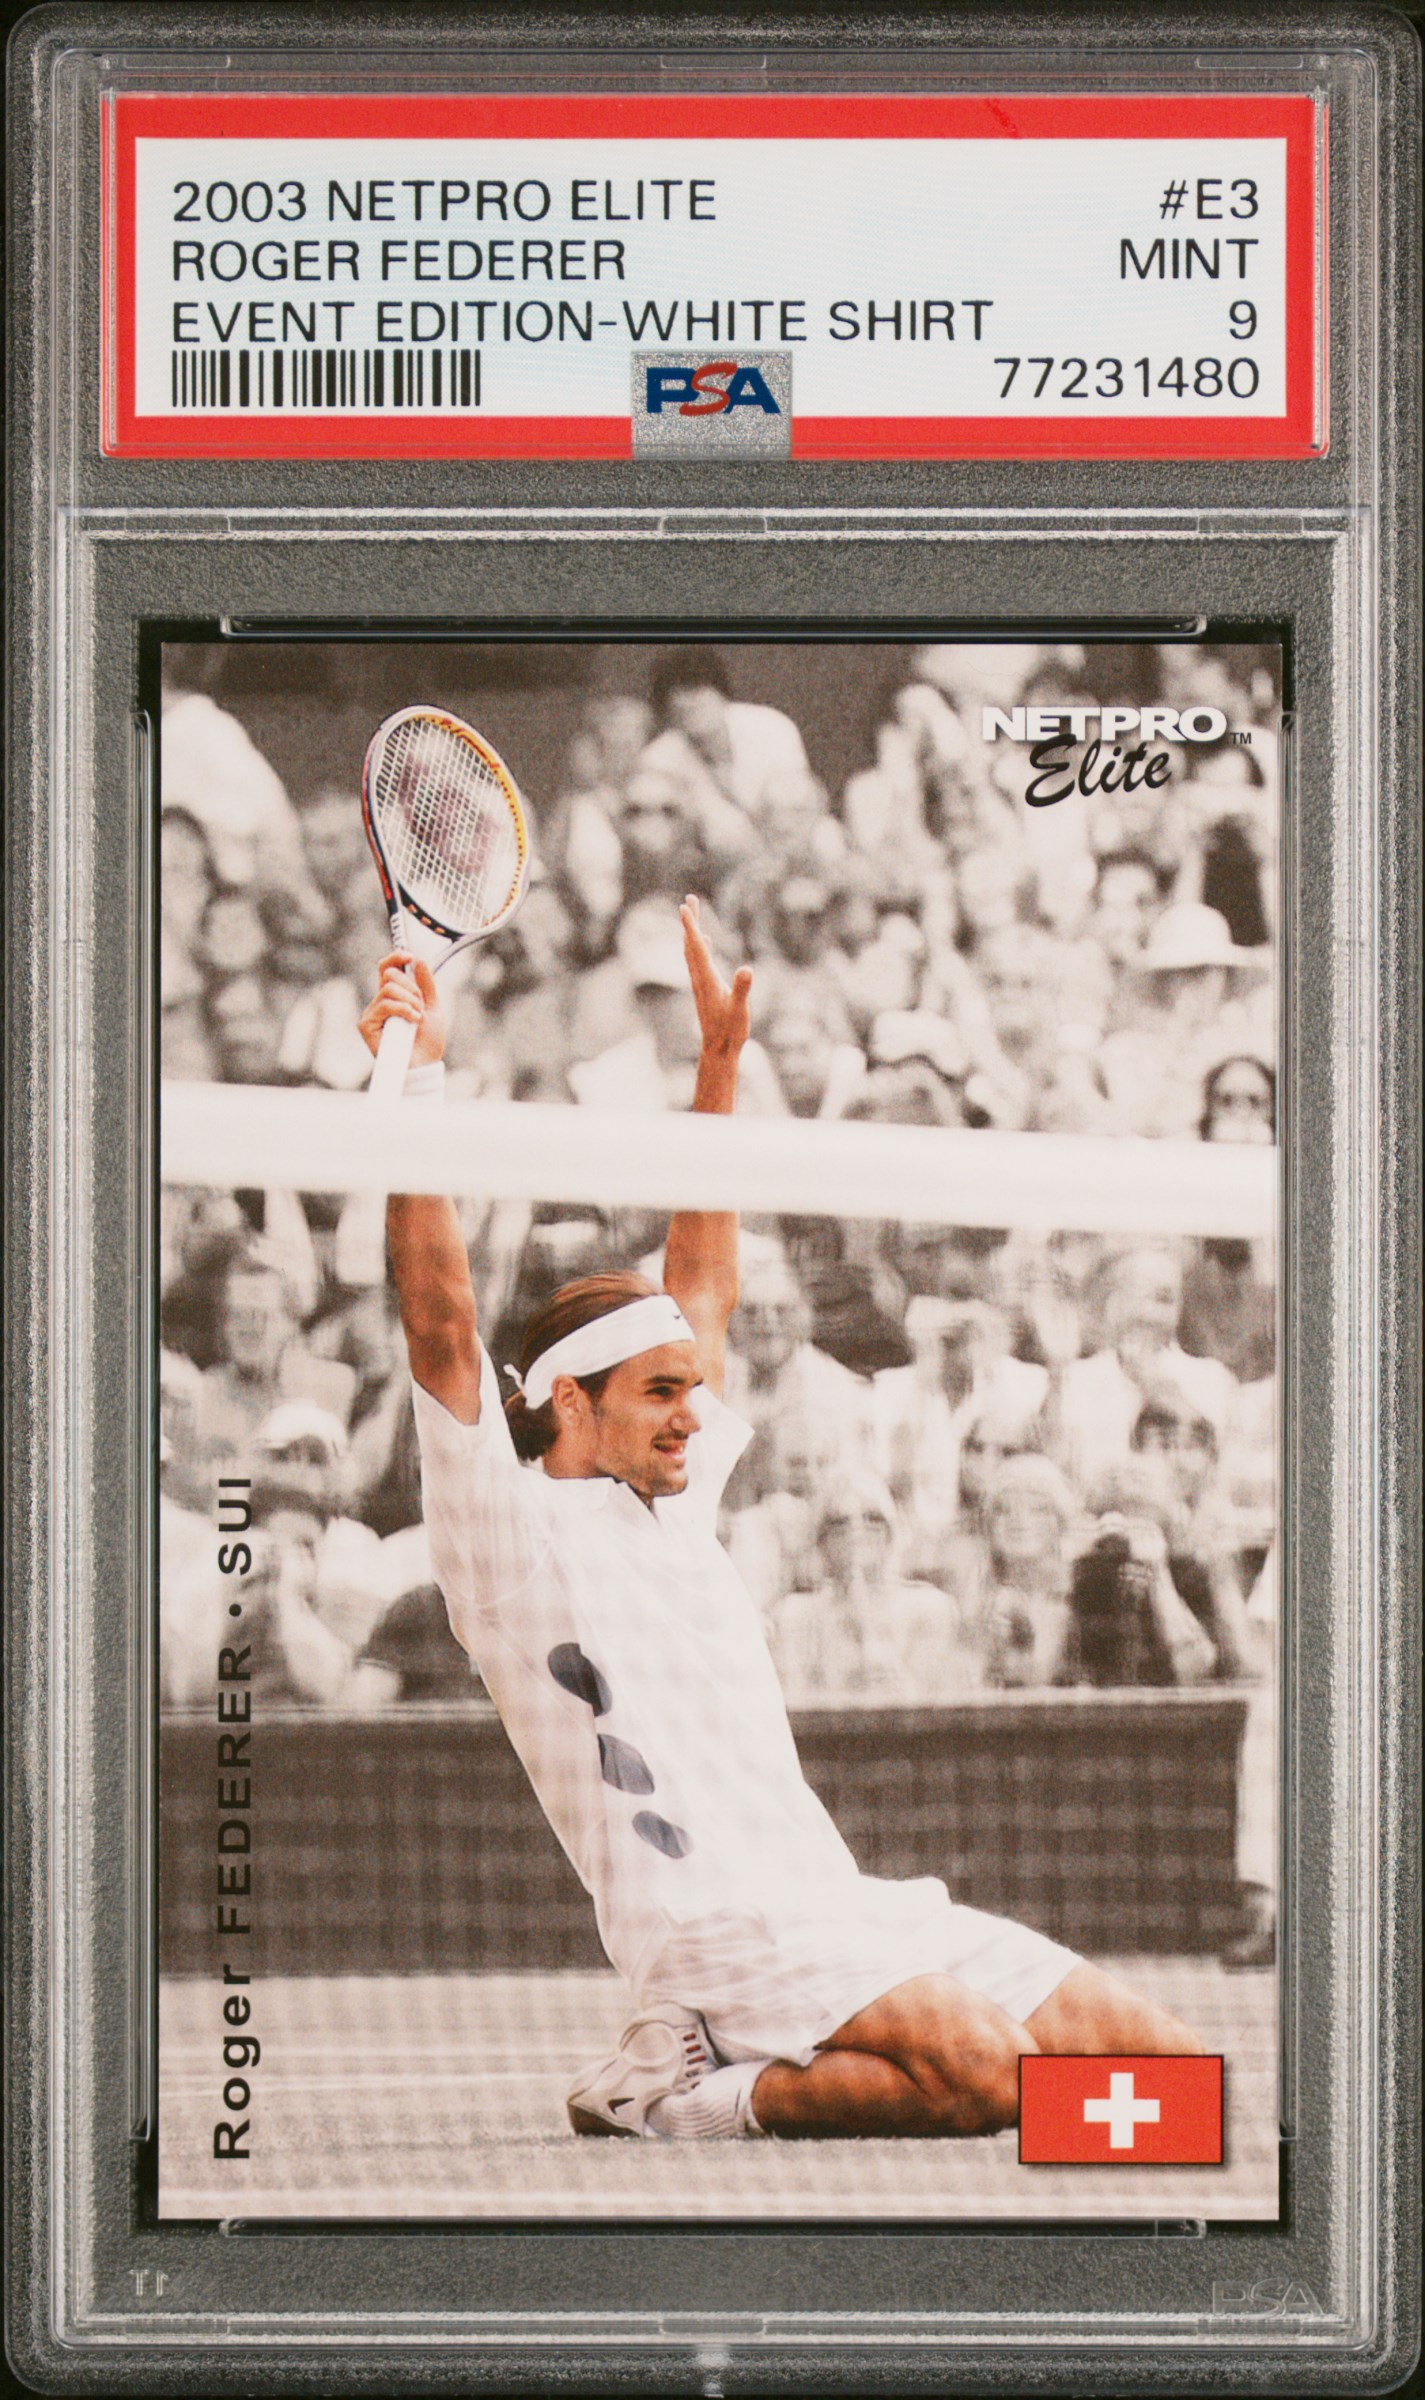 2003 Netpro Elite Event Edition-White Shirt E3 Roger Federer Rookie Card – PSA MINT 9